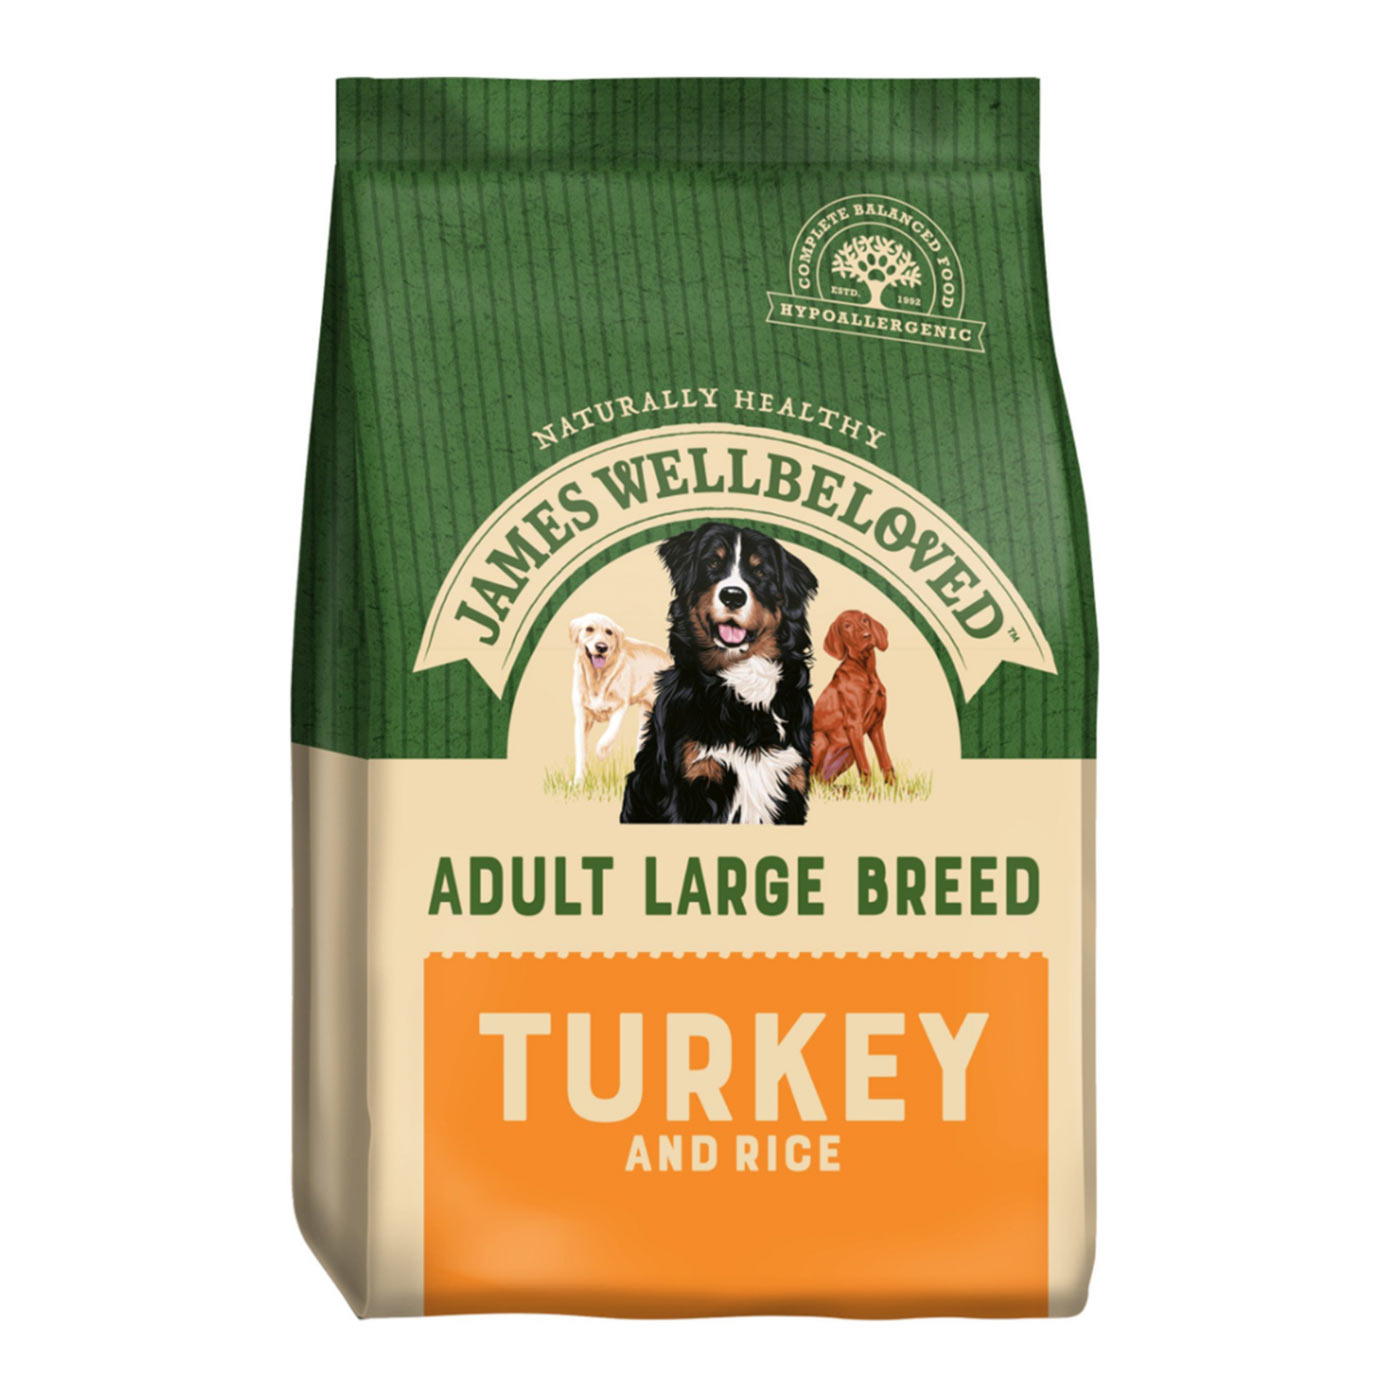 James Wellbeloved Turkey and Rice Large Breed Adult Dog Food